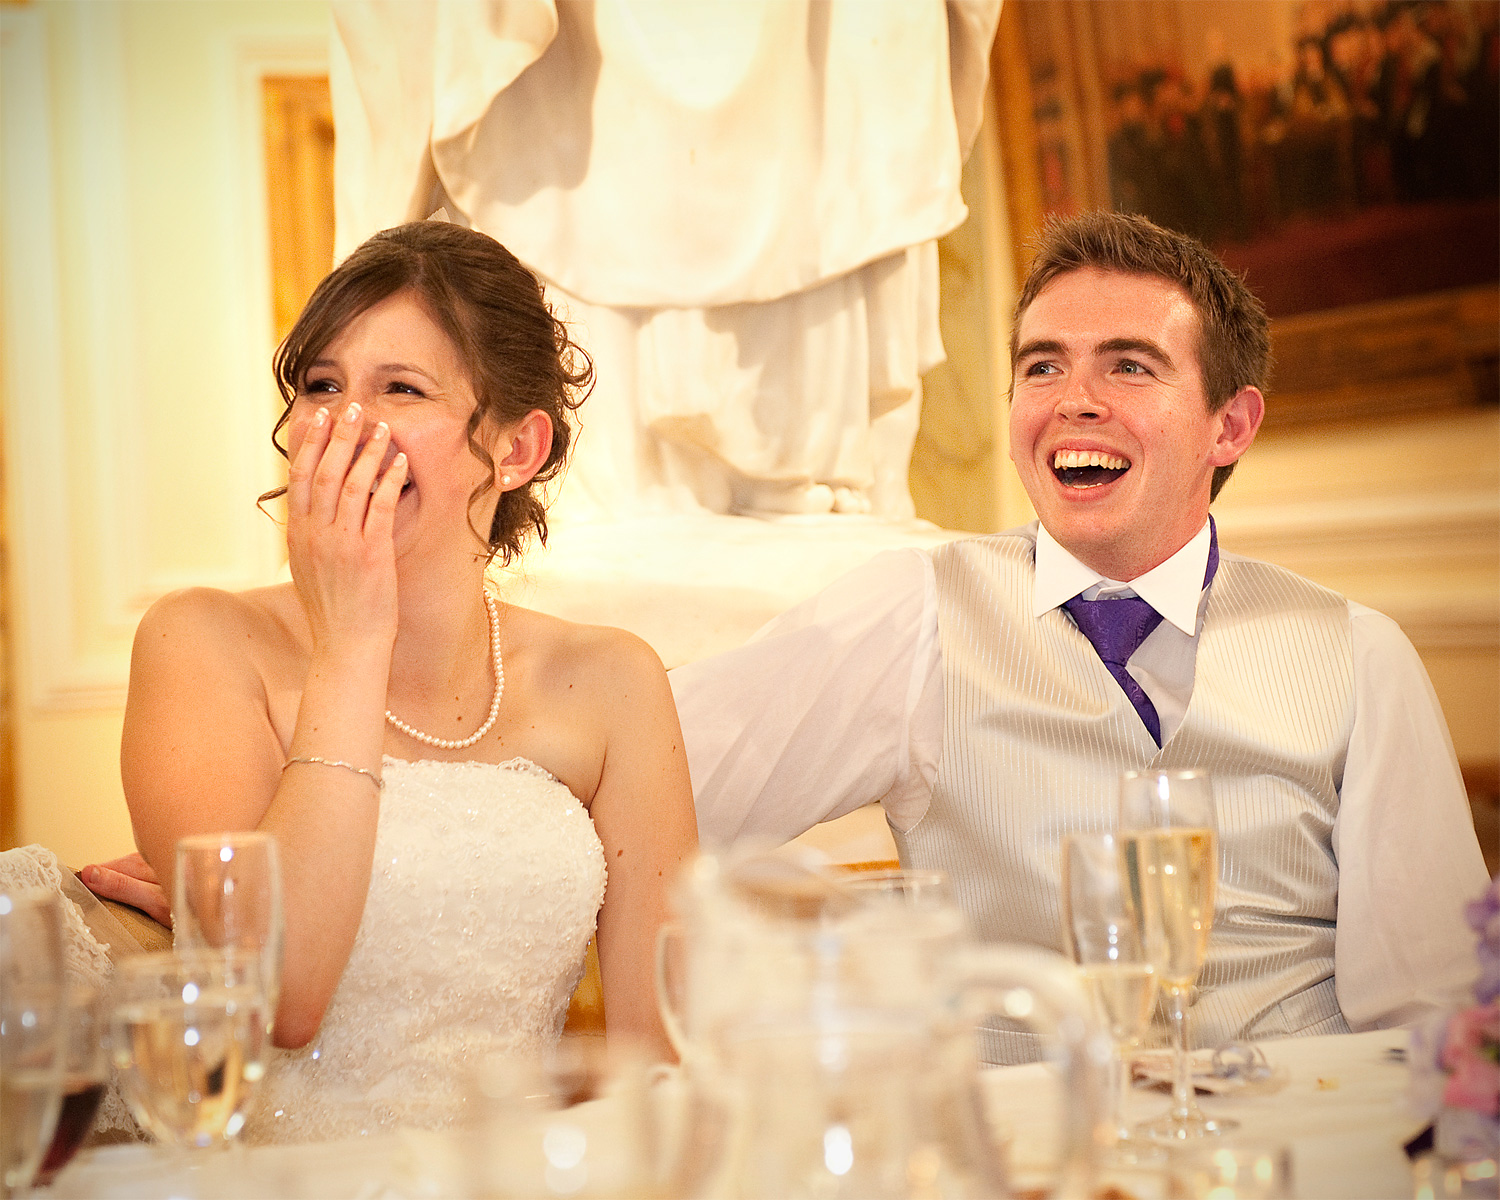 Cardiff-wedding-reception-Laughing-Bride-Groom-City-Hall-Cardiff-wedding-photographer